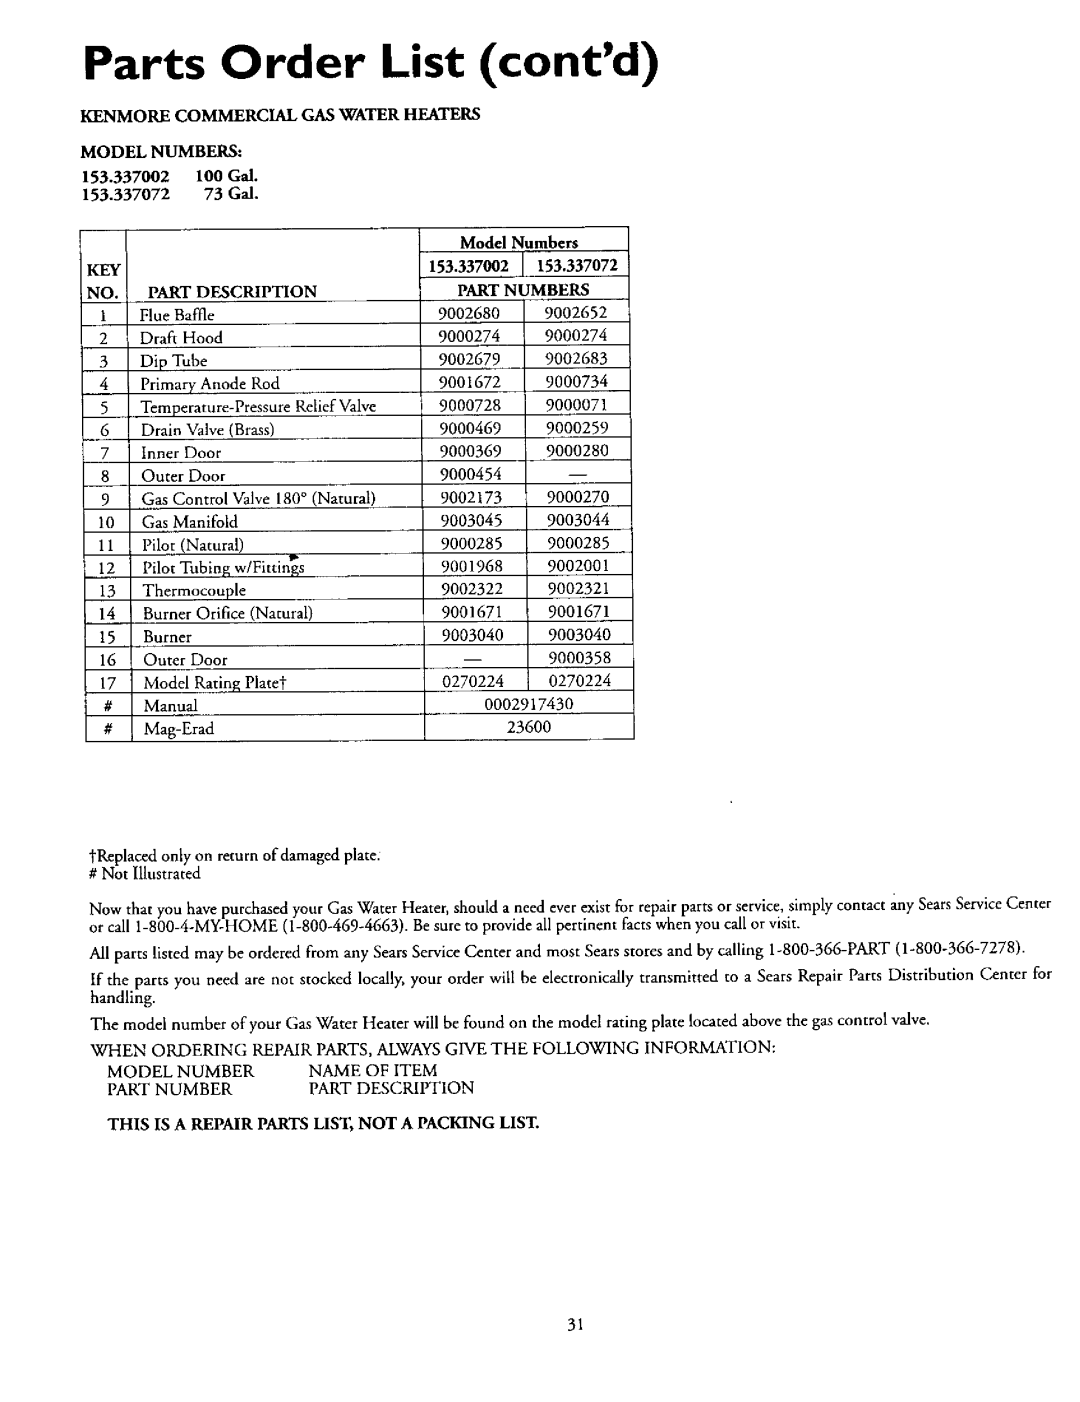 Kenmore 153.337002, 153.337072 owner manual Parts Order List contd, Kenmorecommercialgaswater Heaters Model Numbers 